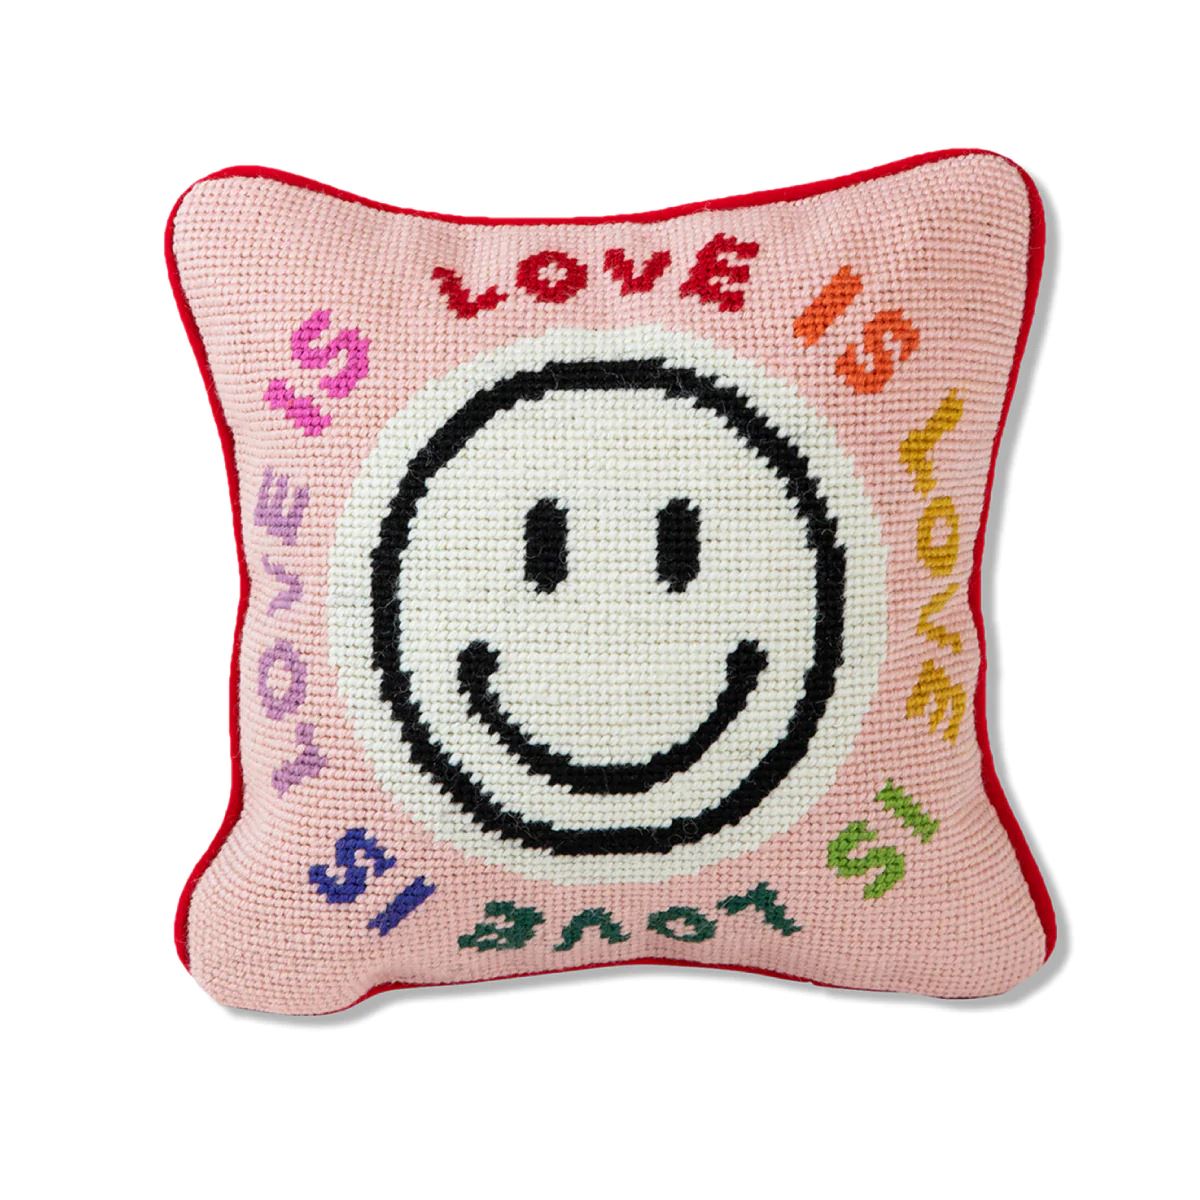 Love is Love Needlepoint Pillow Pillows Furbish Pink 